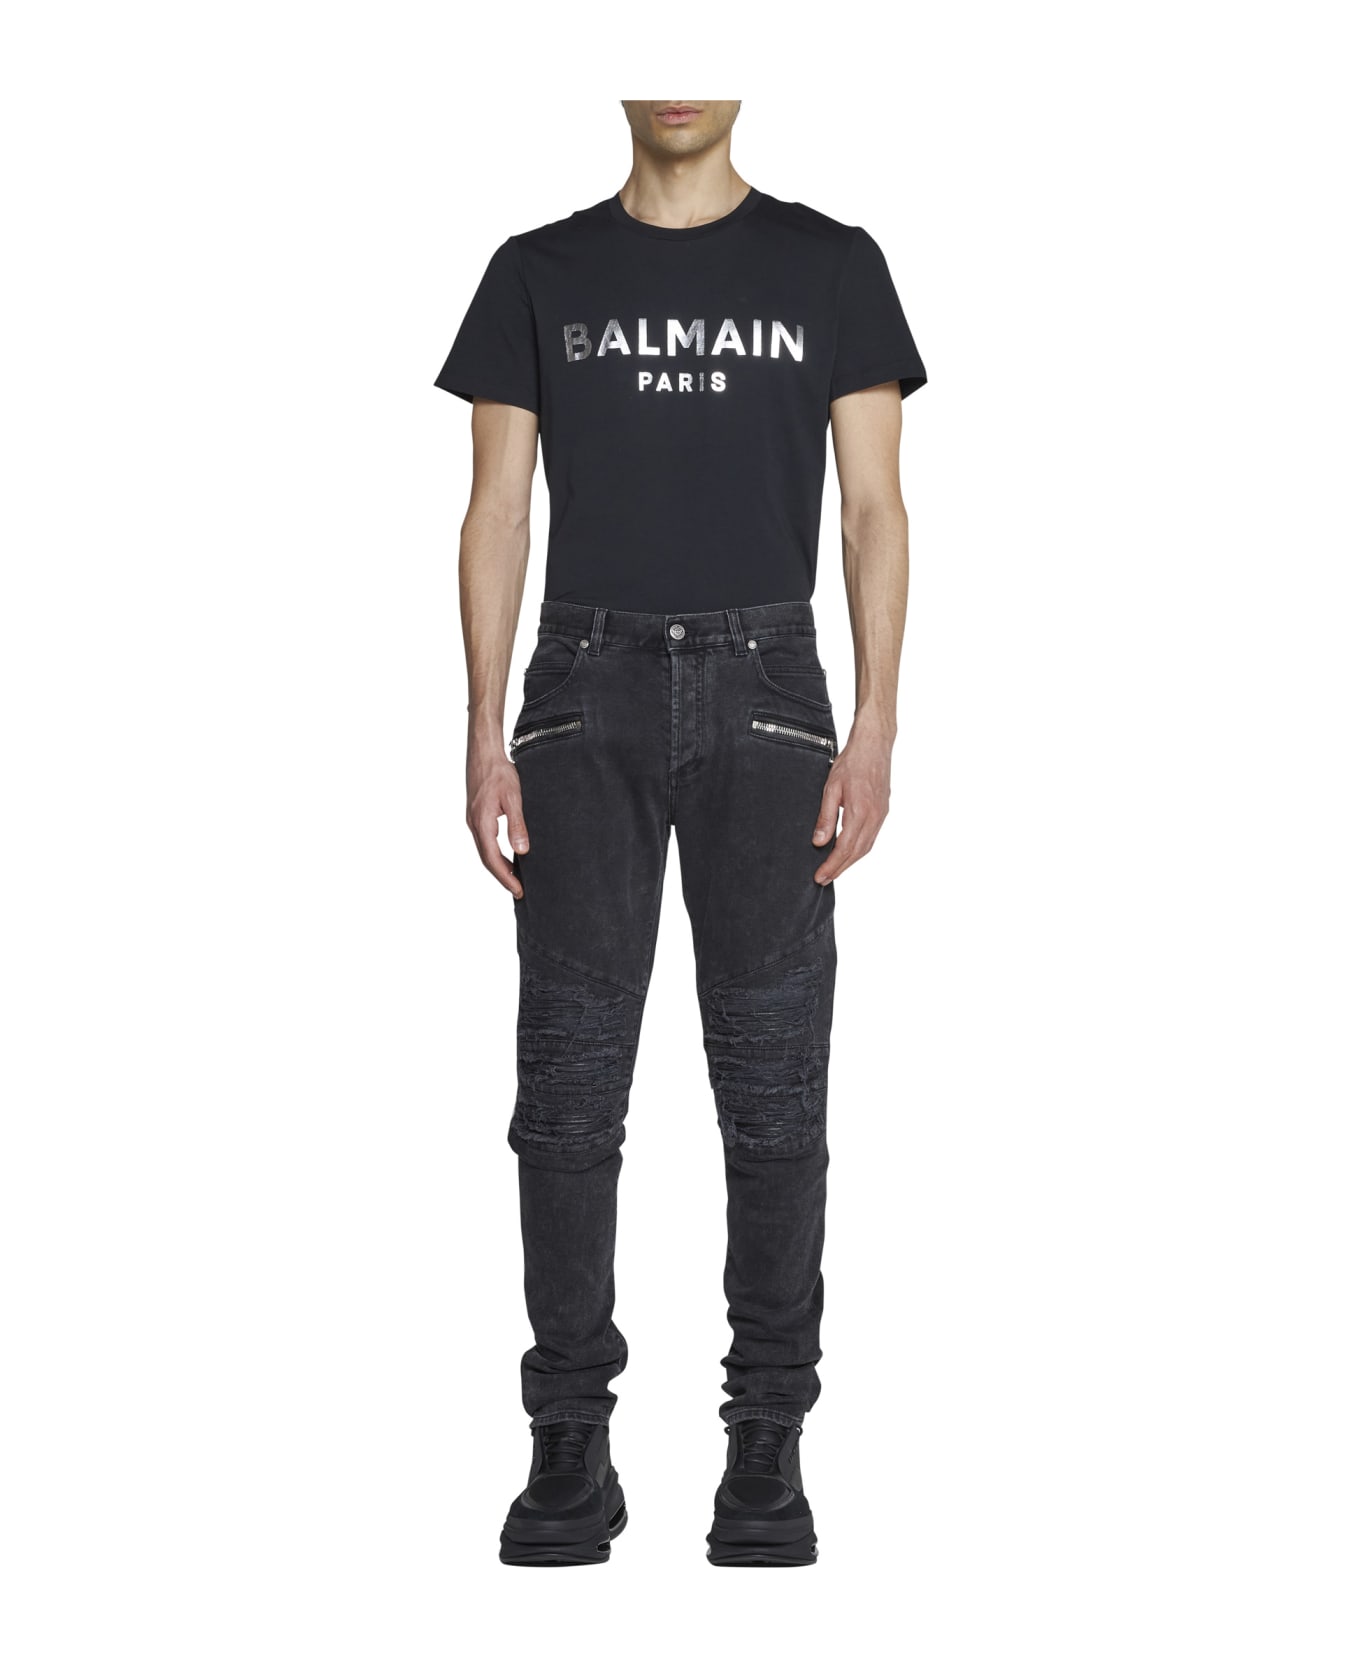 Balmain printed Jeans - Noir delave